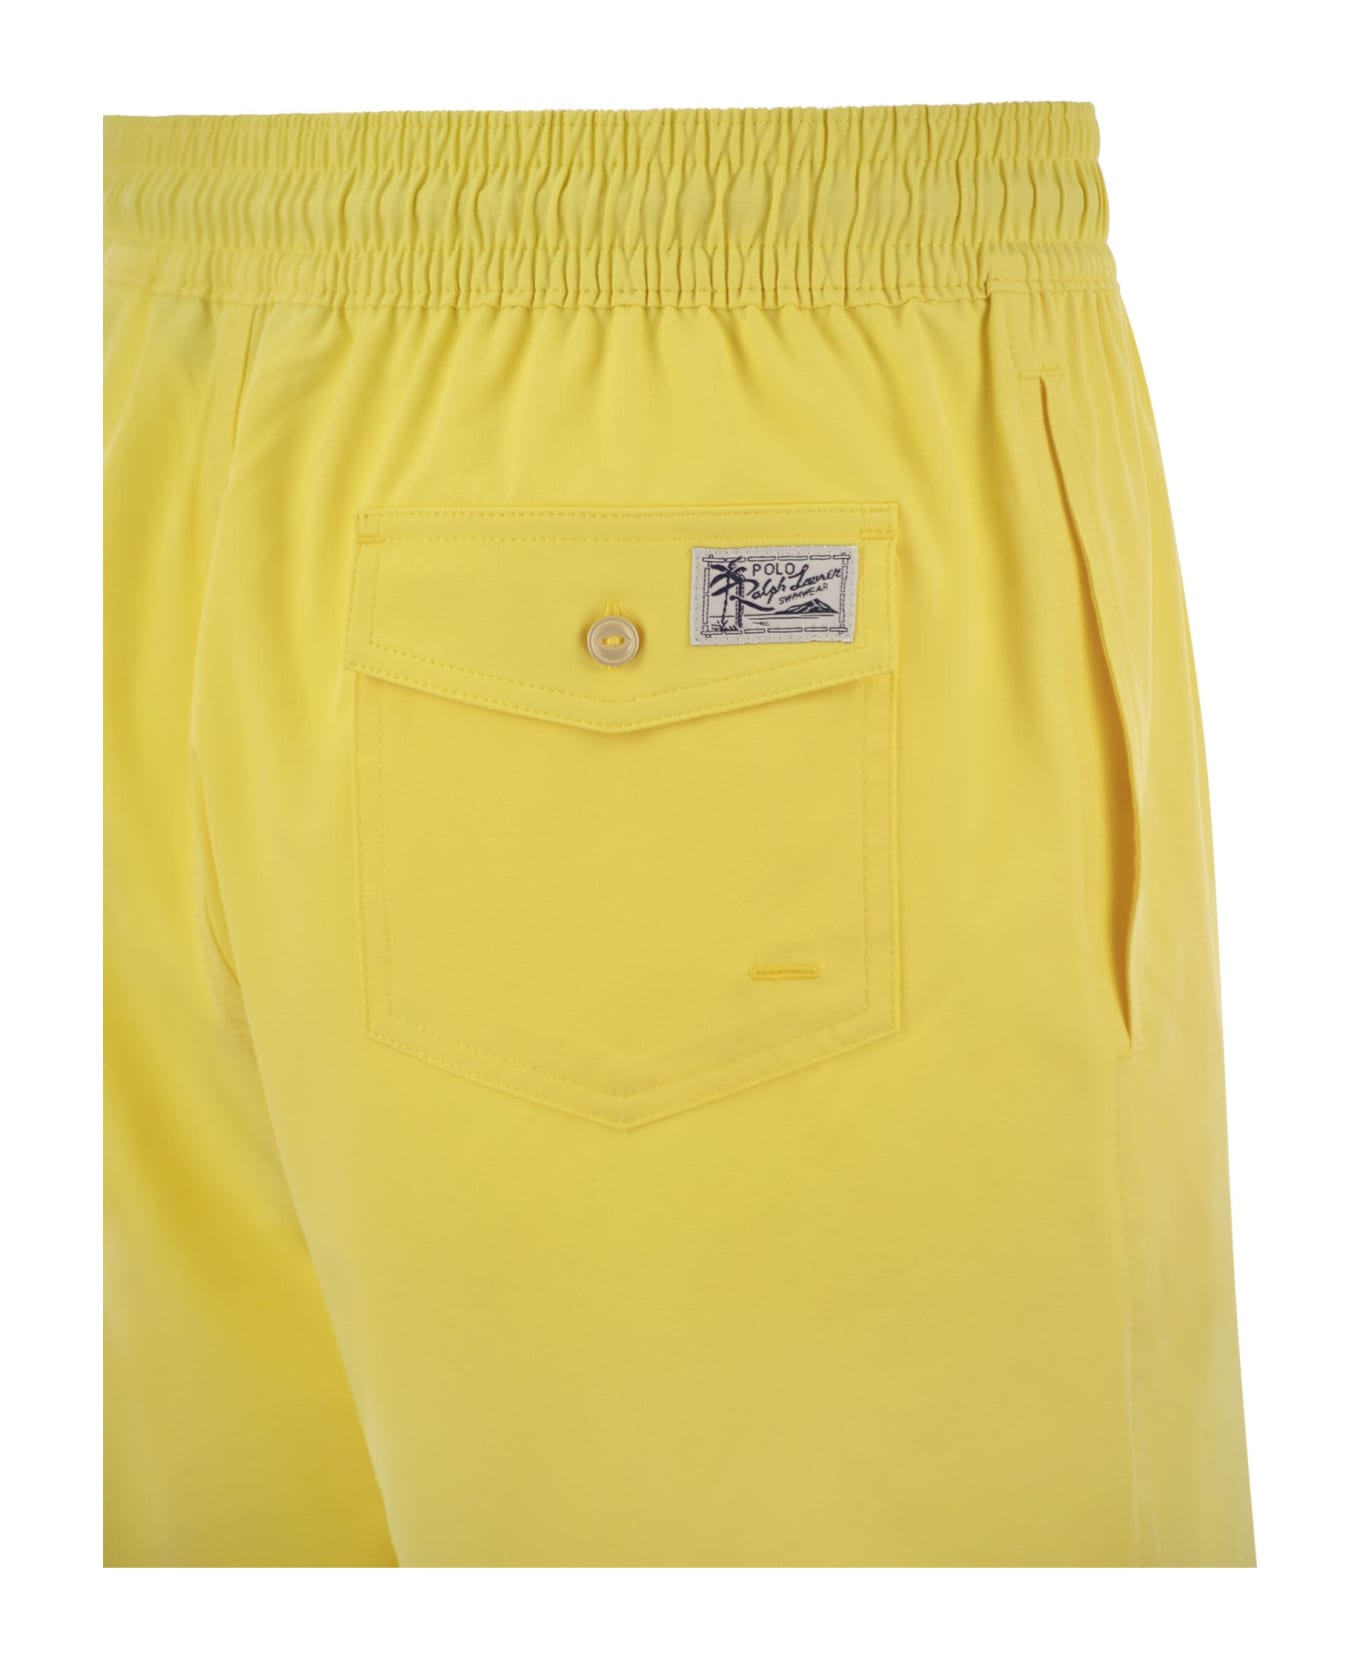 Polo Ralph Lauren Beach Boxers - Yellow